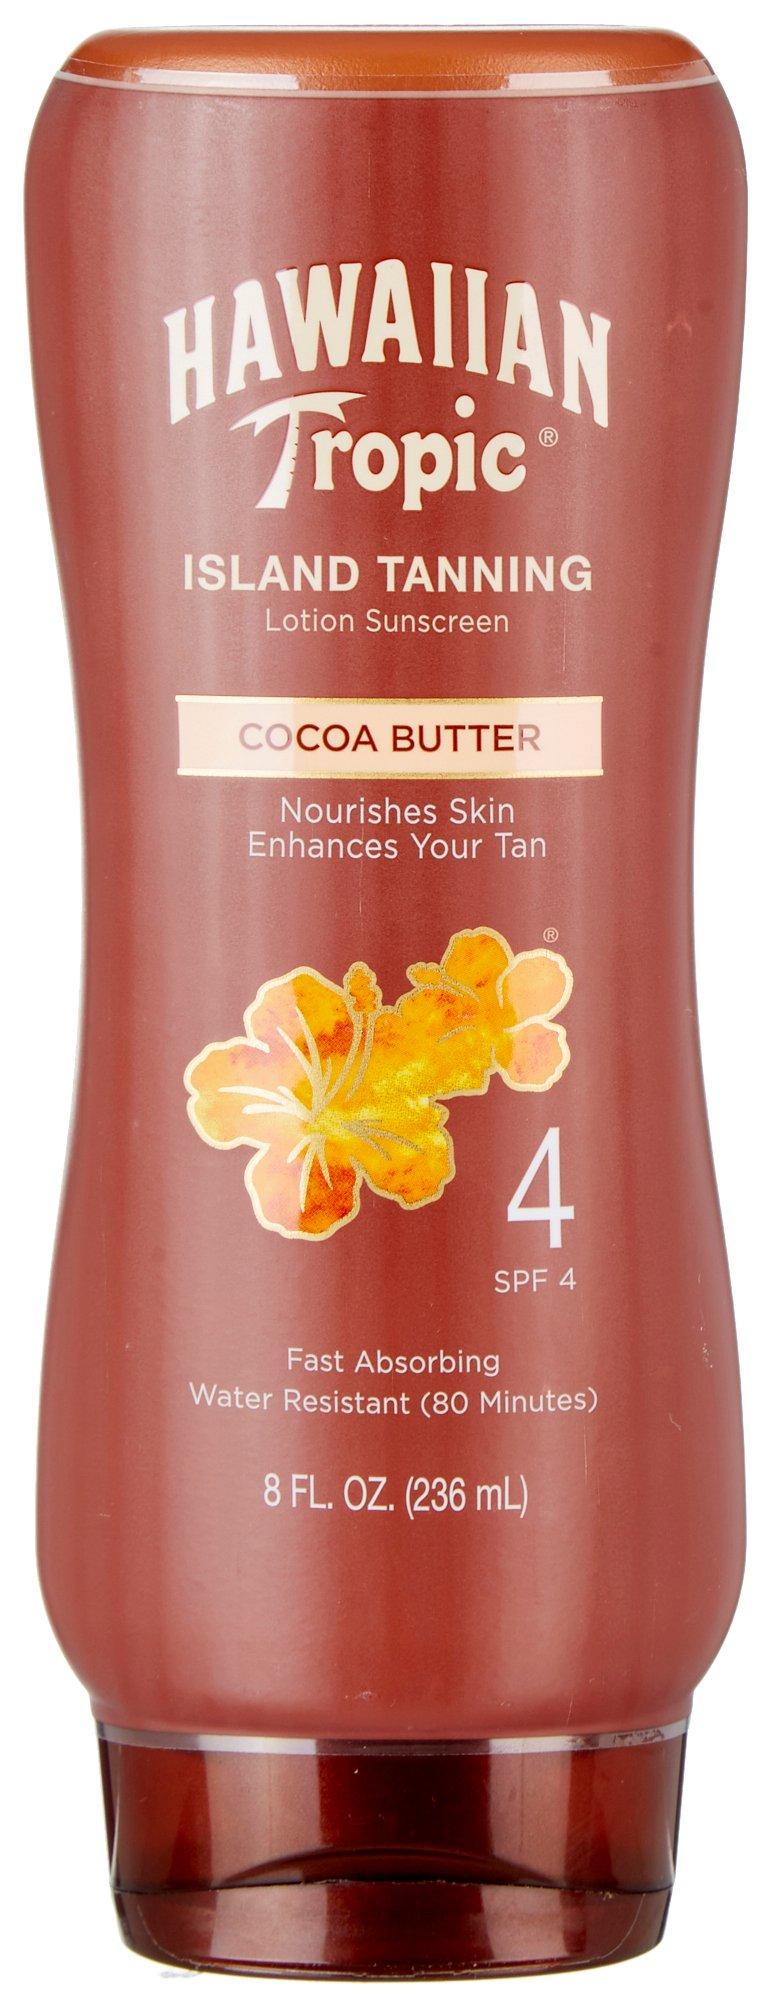 Hawaiian Tropic Island Tanning SPF 4 Sunscreen Lotion